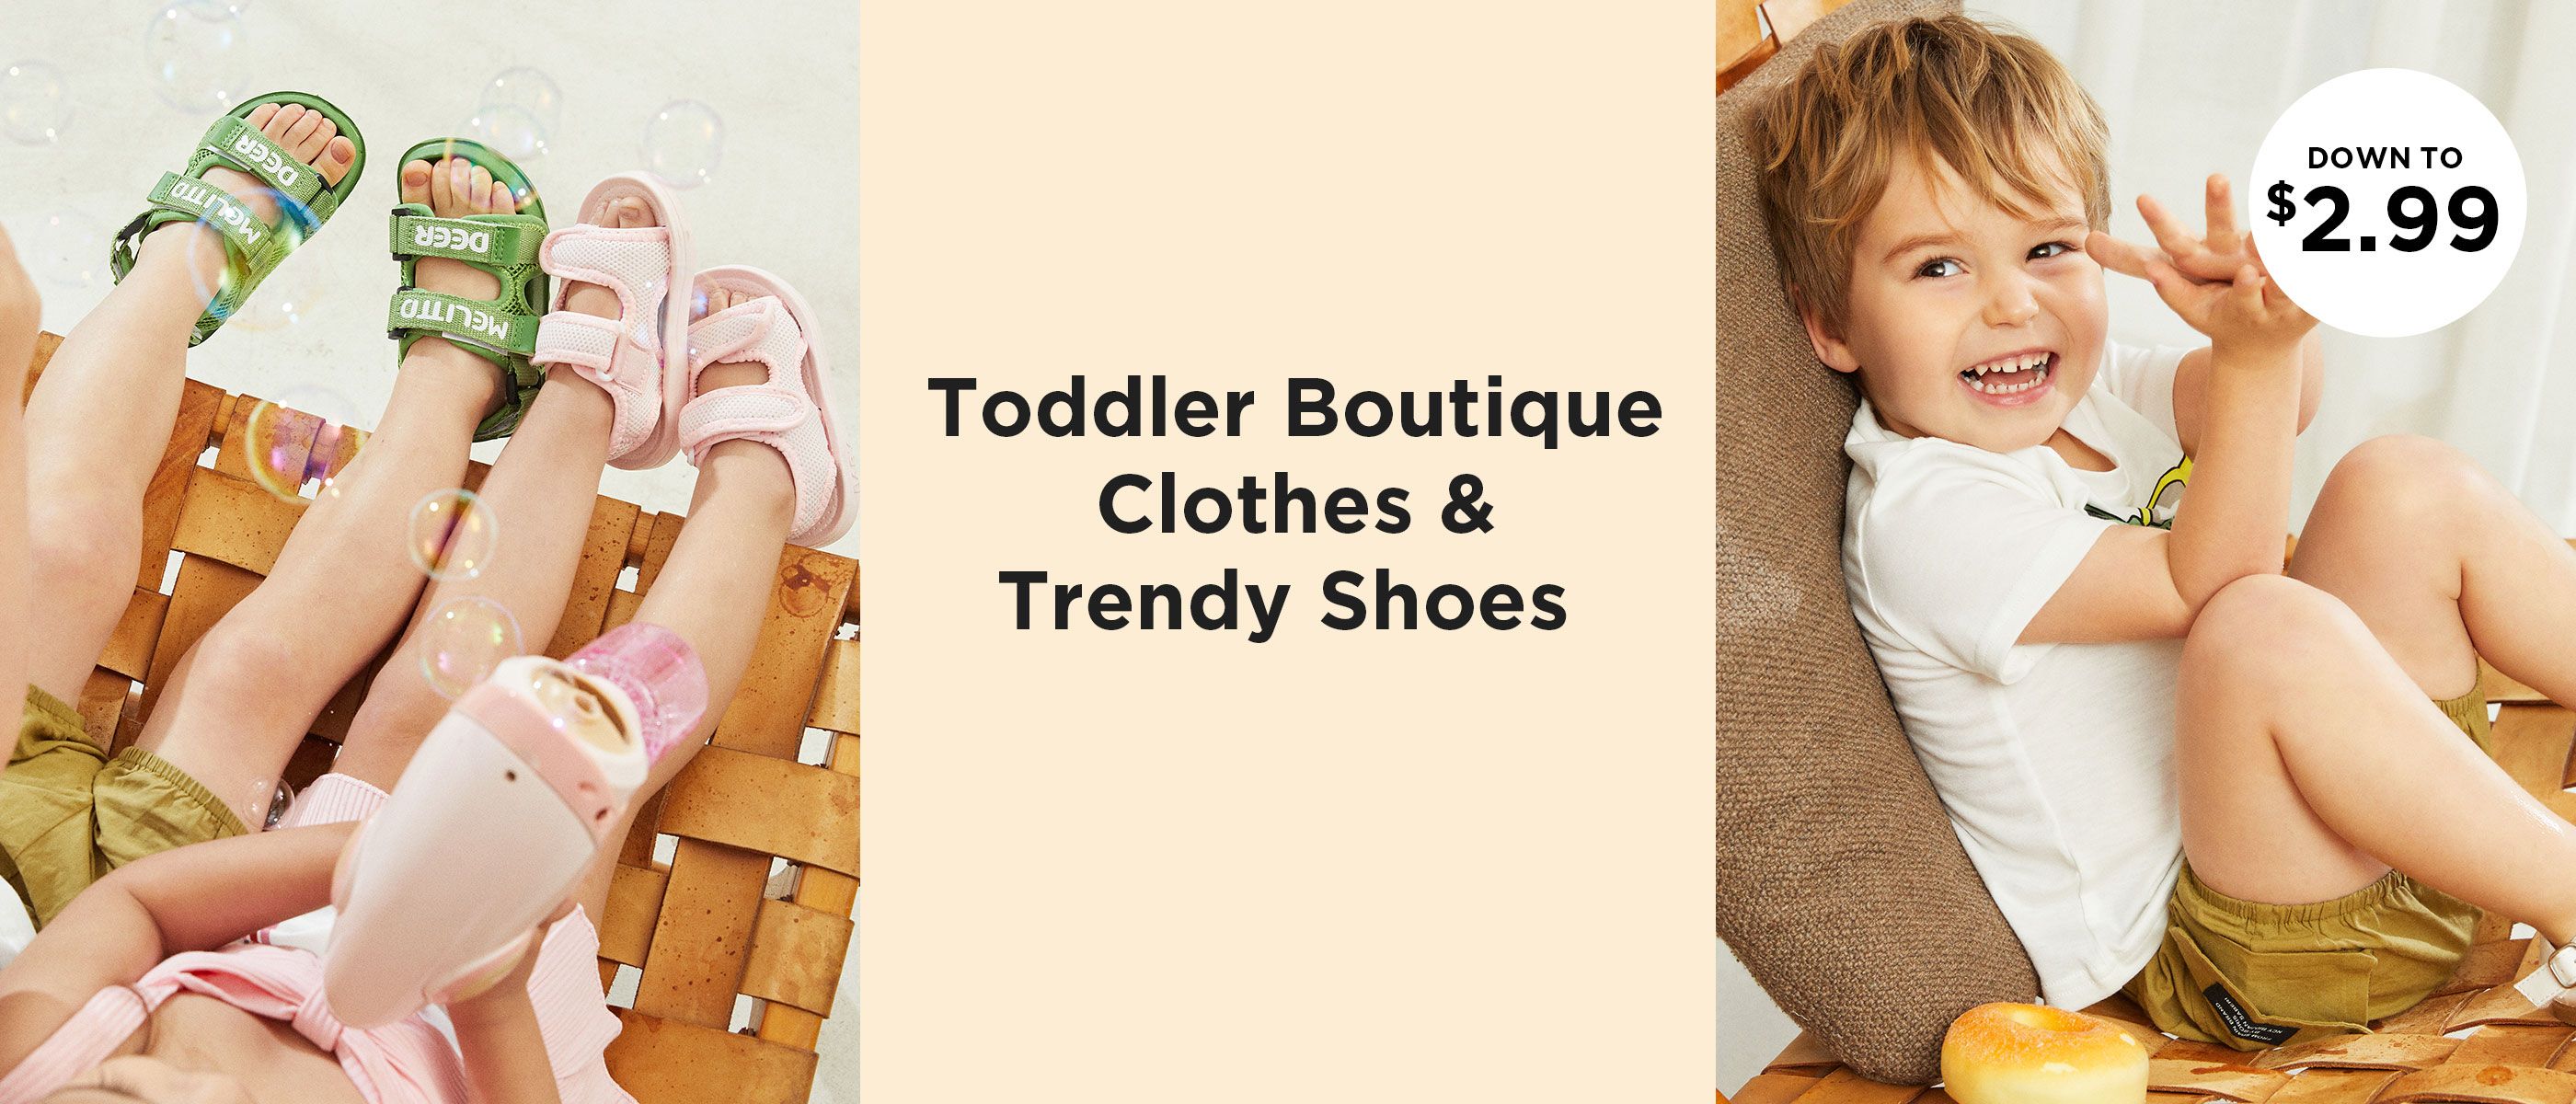 Toddler Boutique Clothes & Trendy Shoes